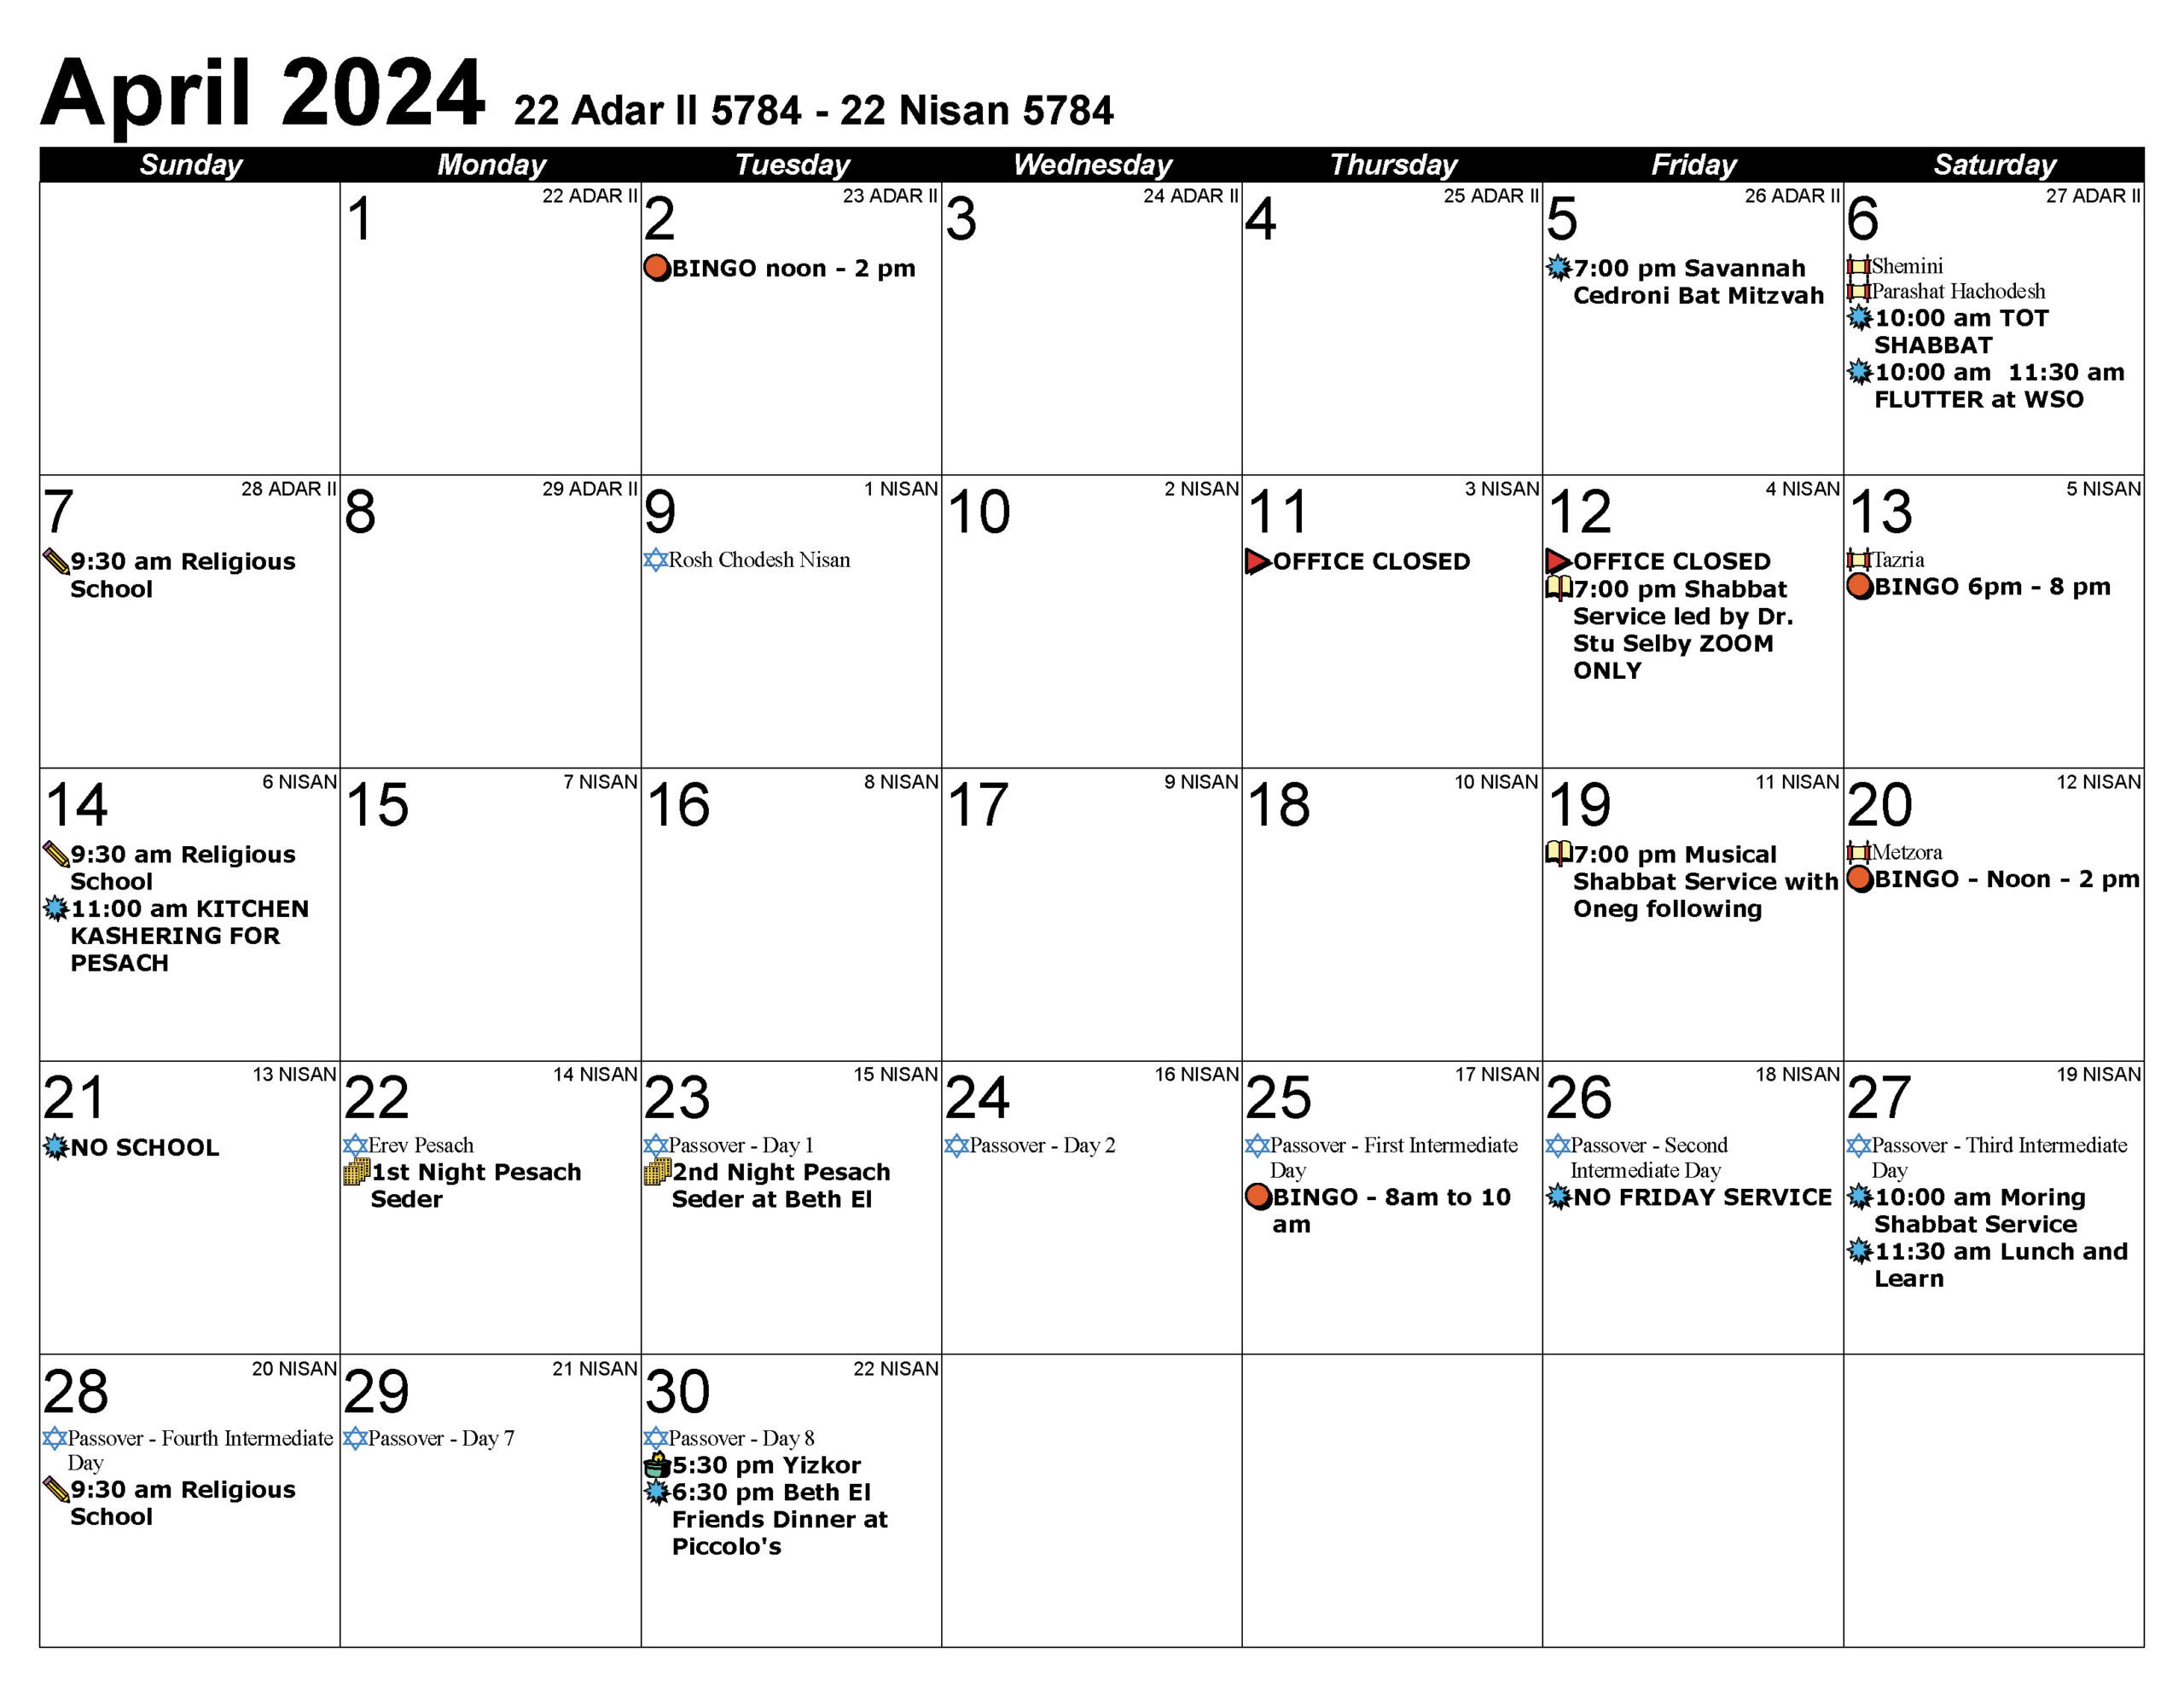 Calendar April 2024